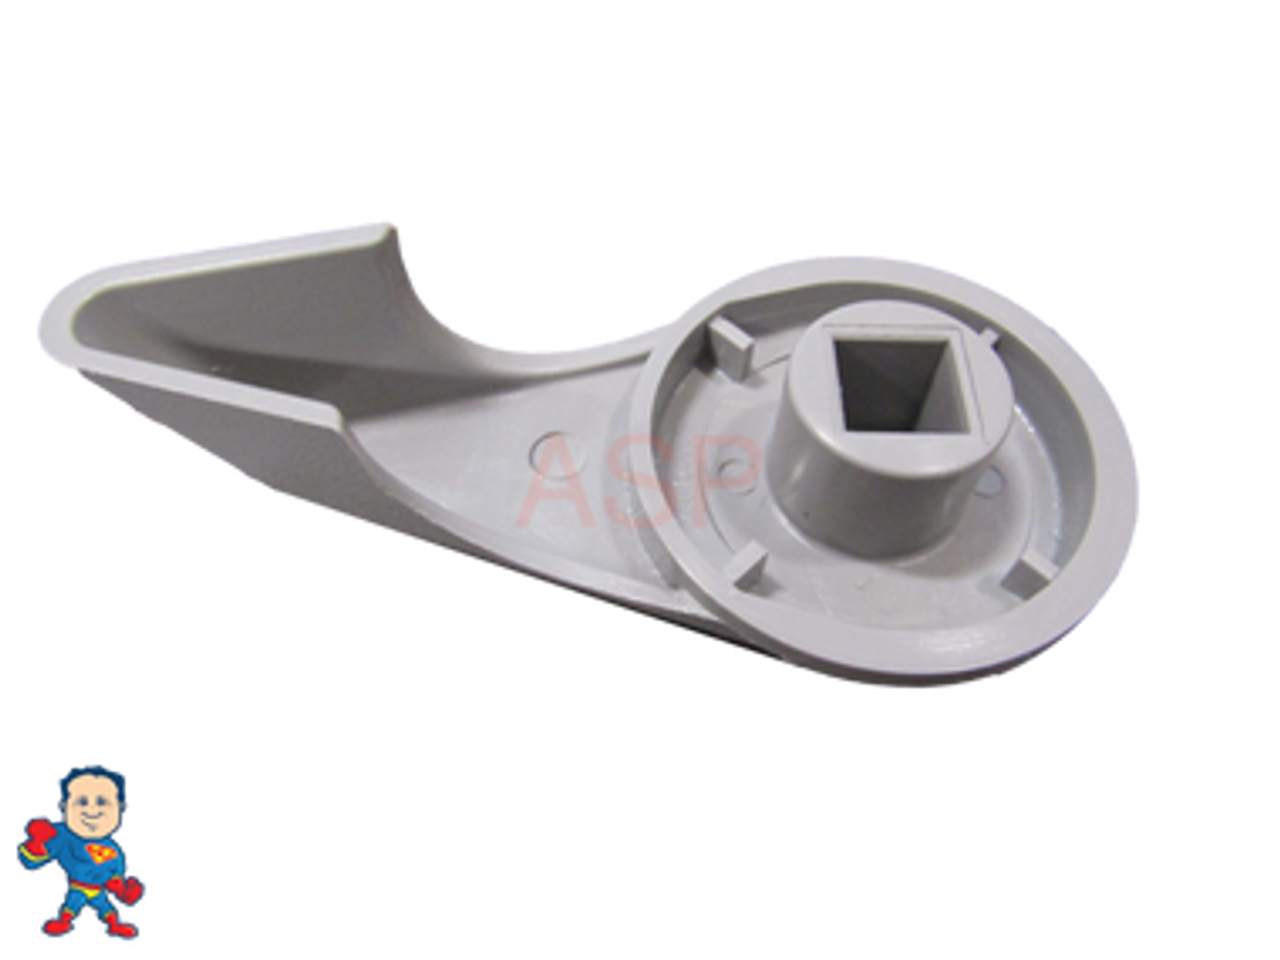 Diverter Valve Spa Gray Hot Tub O-Ring Textured Cap Stem Kit Reinforced Handle Video